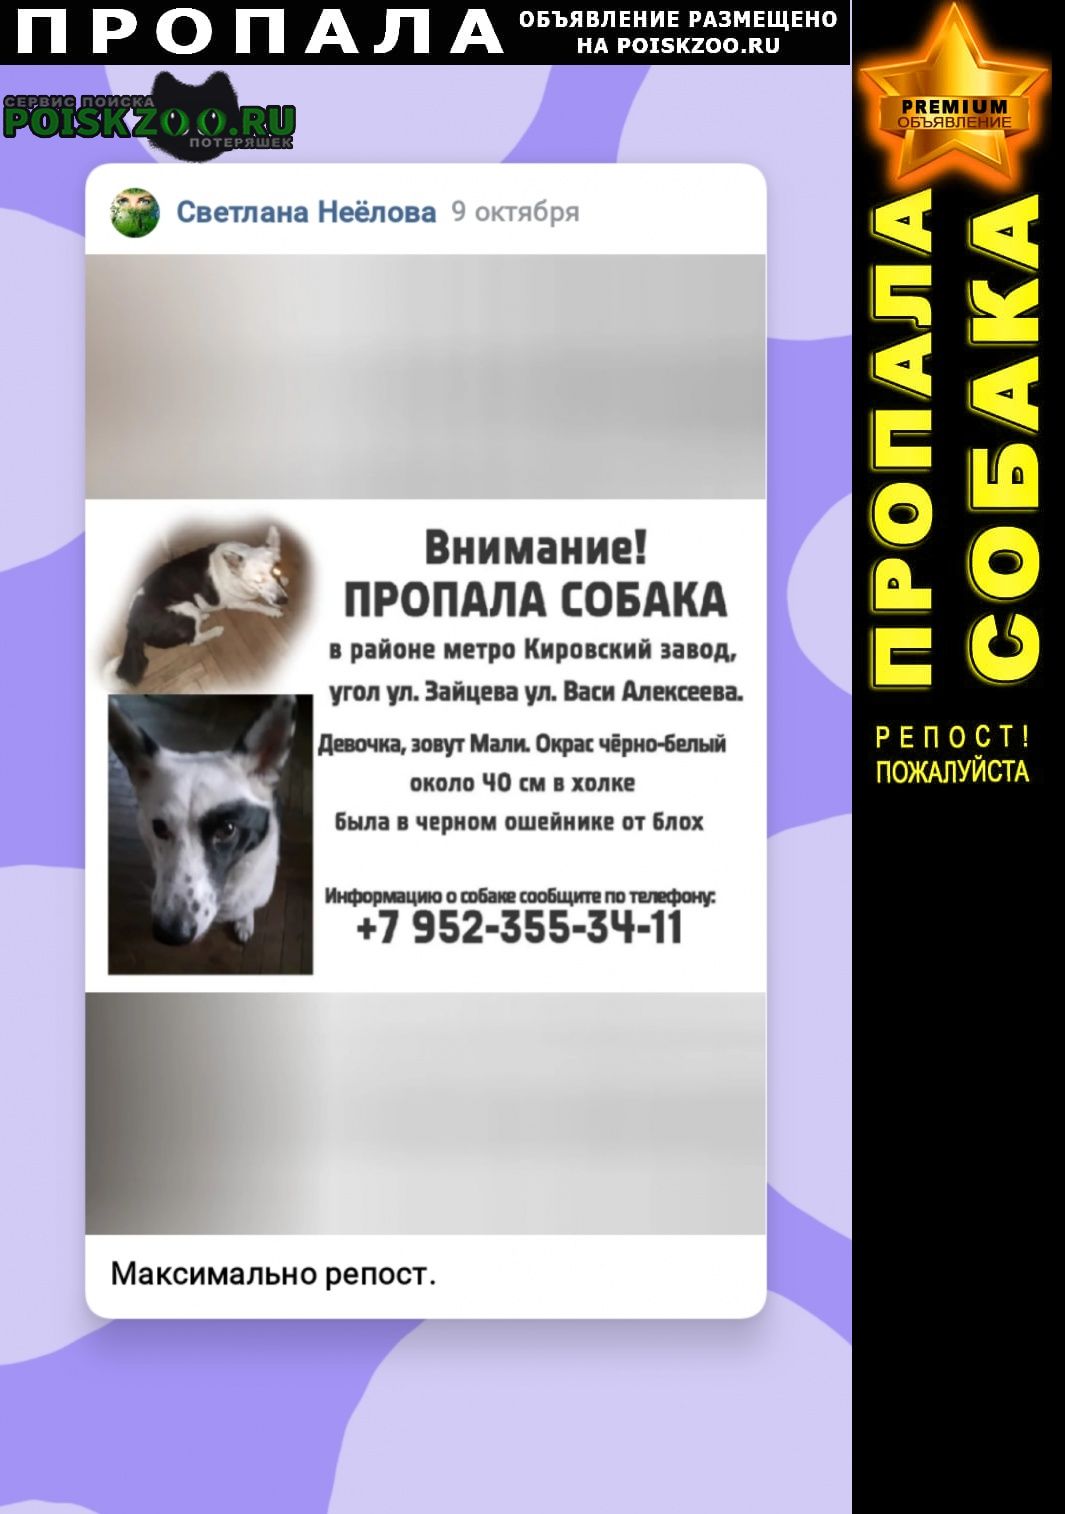 Санкт-Петербург Пропала собака помогите пожалуйста найти собаку